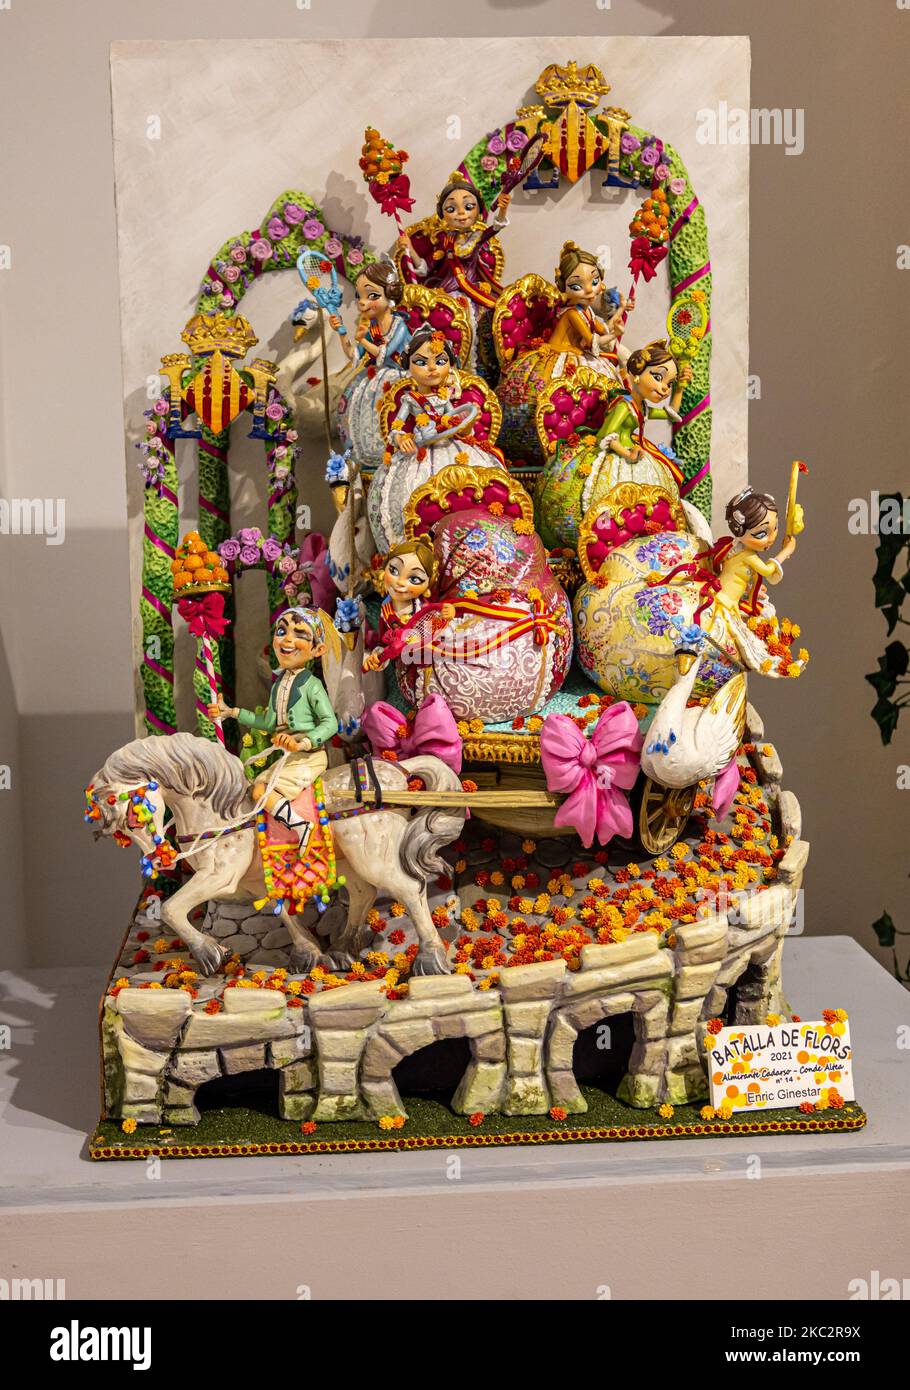 2021 pardoned Ninot Child 'Battle of the flowers', Museu Faller de València, Spain Stock Photo